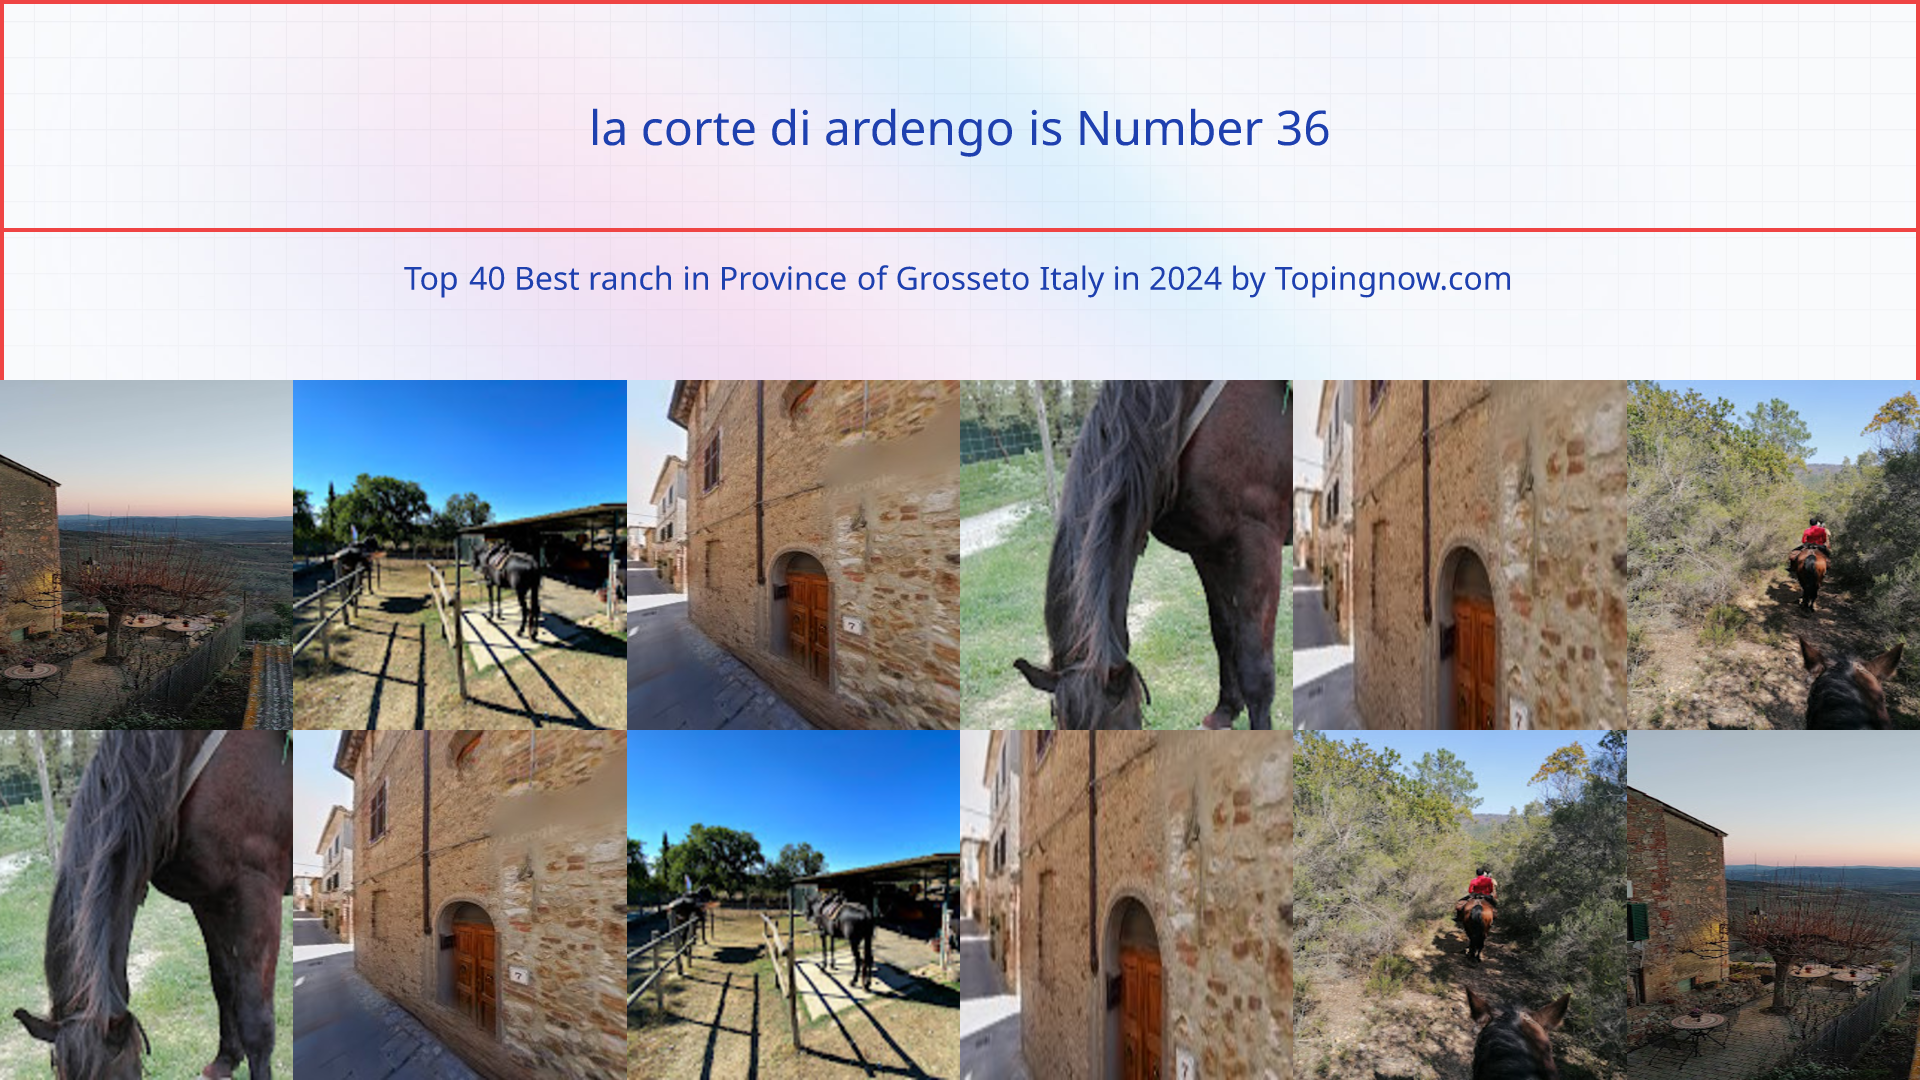 la corte di ardengo: Top 40 Best ranch in Province of Grosseto Italy in 2024